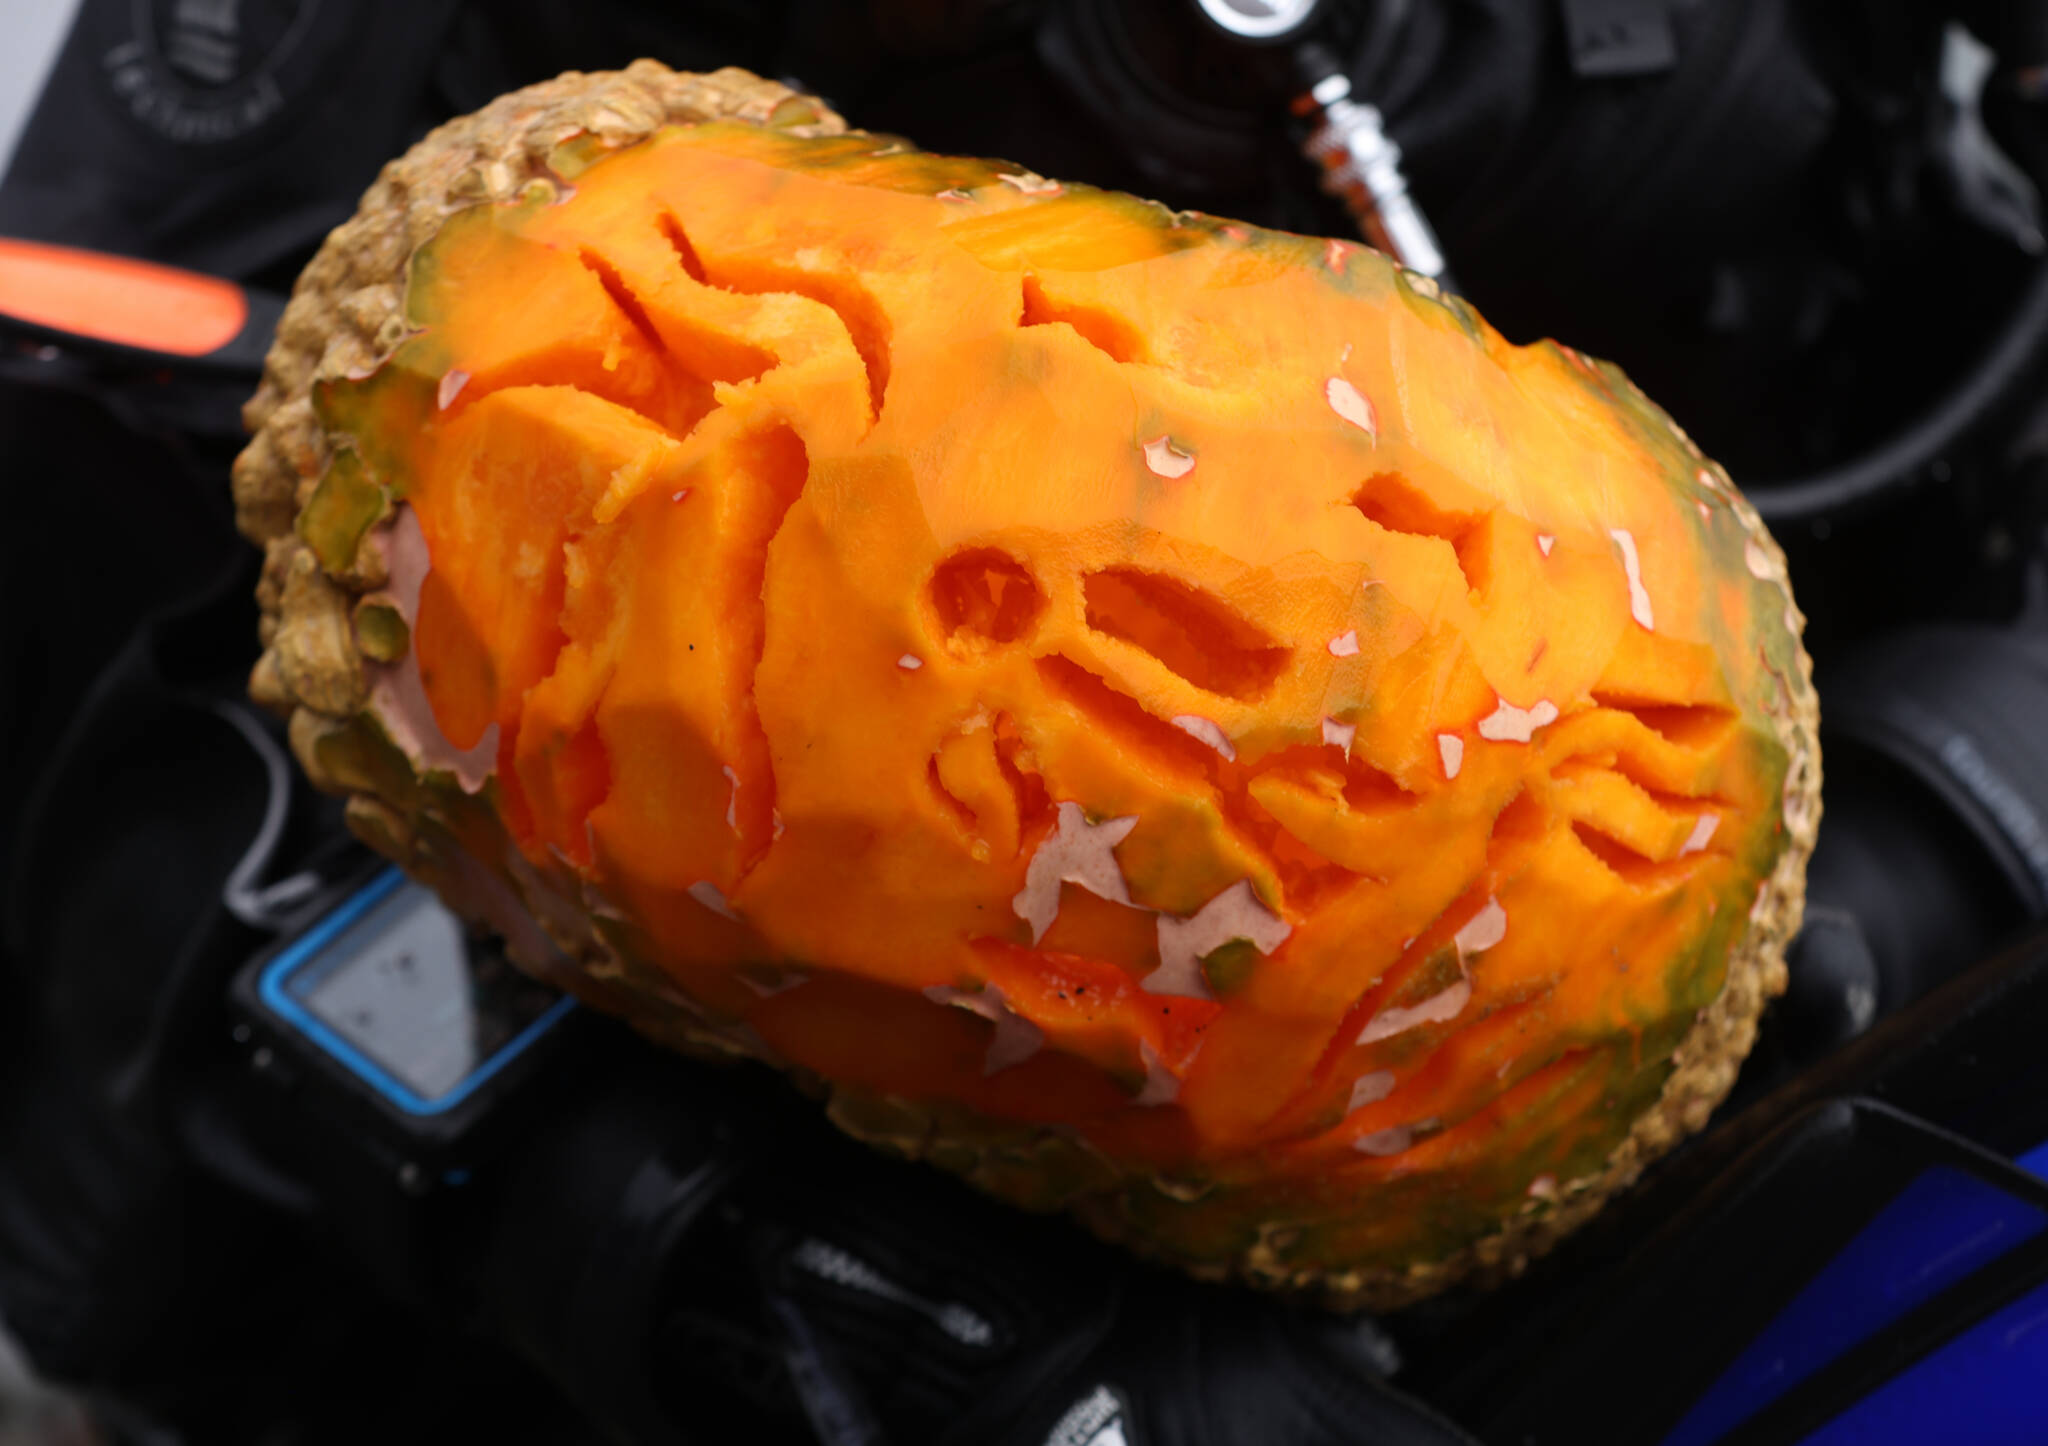 Muriel Dittrich’s pumpkin won Best In Show at an underwater pumpkin carving event held Sunday at Auke Rec. (Ben Hohenstatt / Juneau Empire)